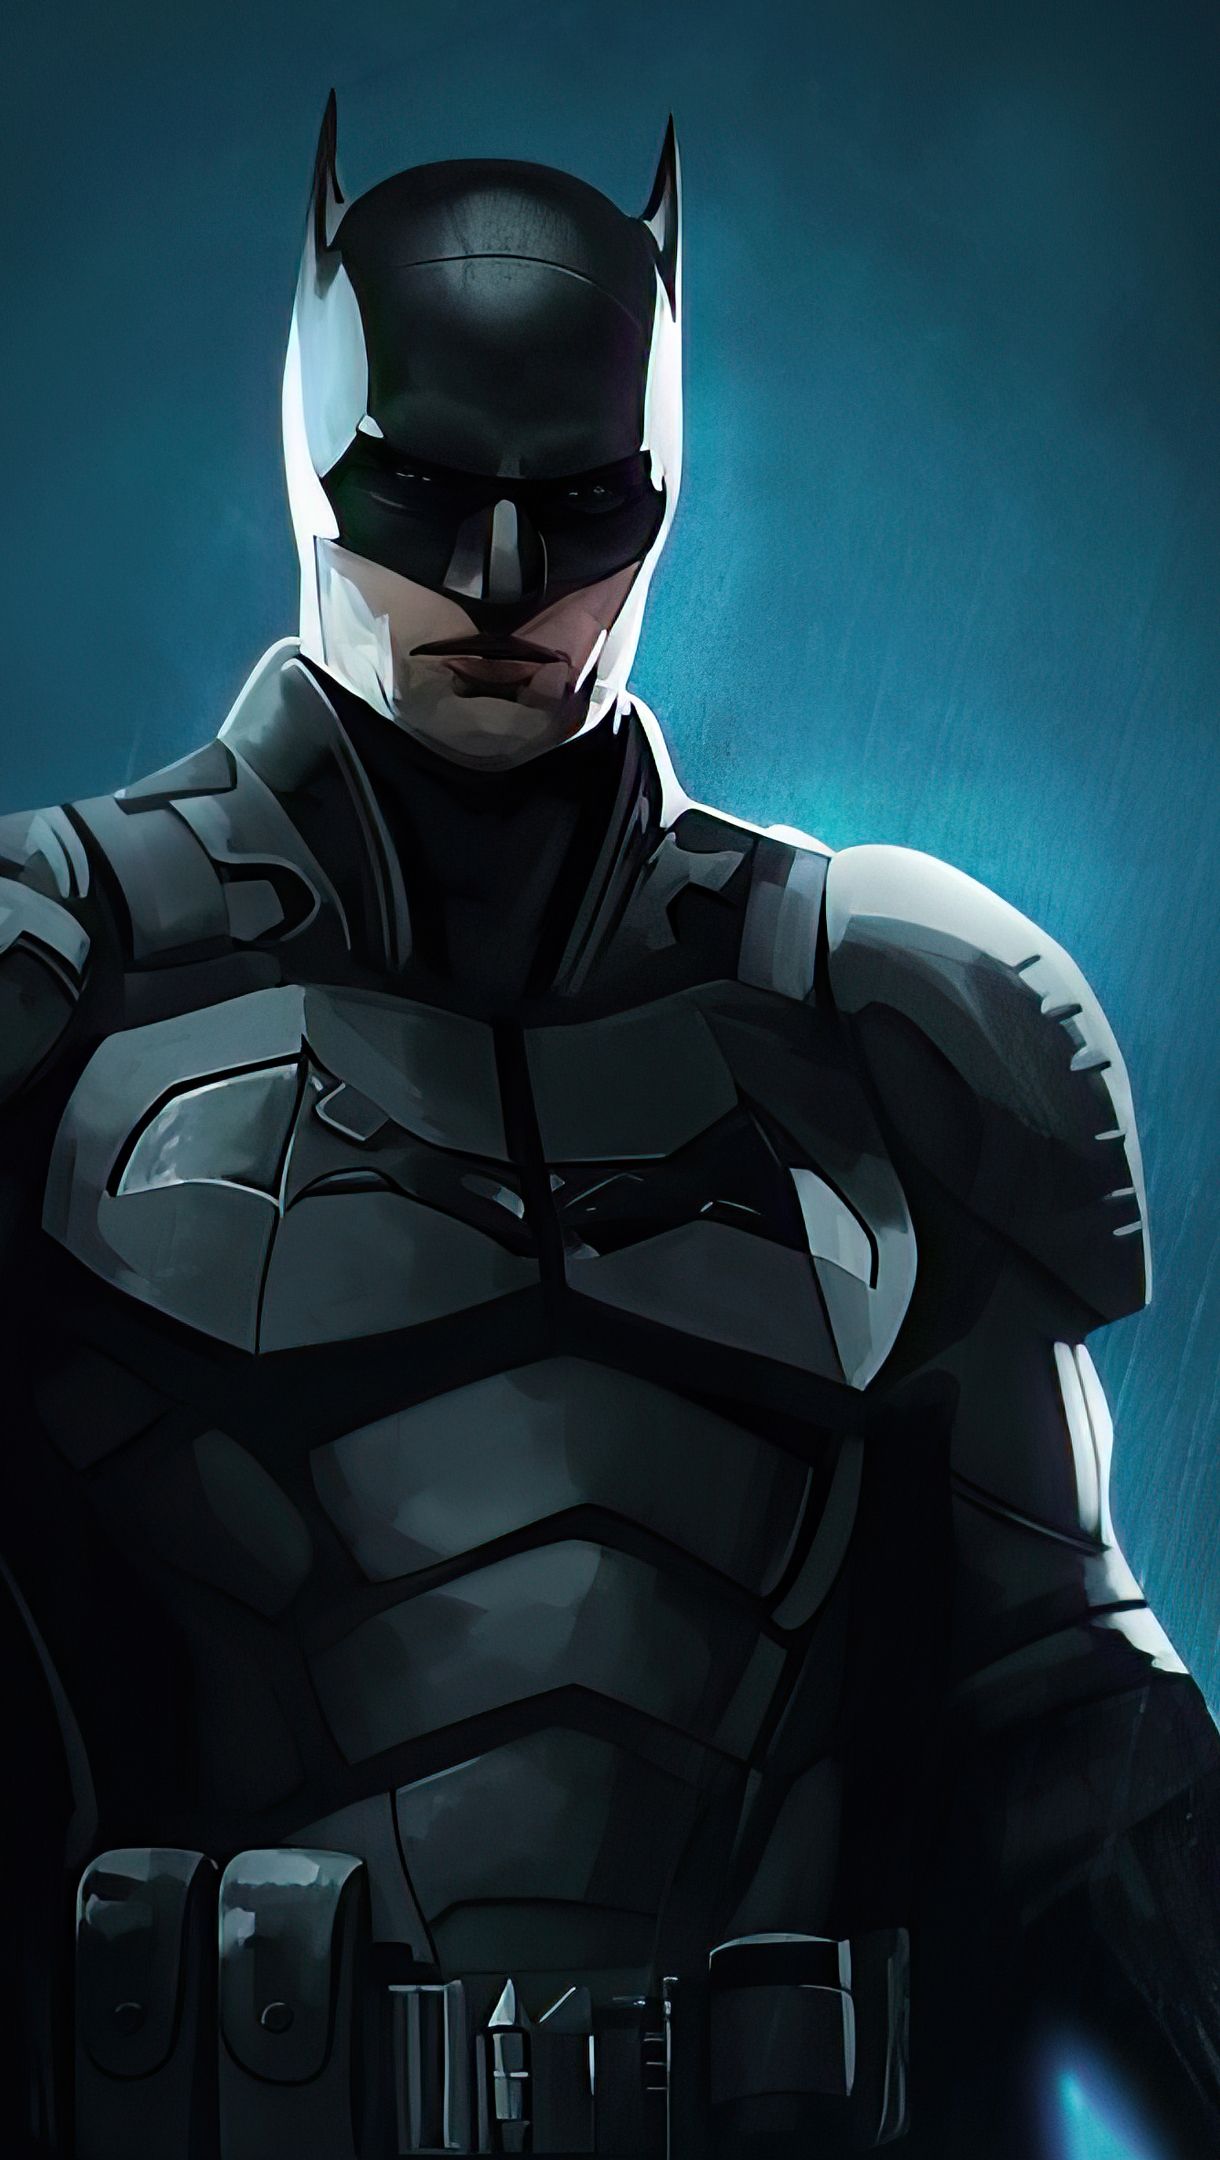 The batman 2021 Poster Wallpaper 4k Ultra HD